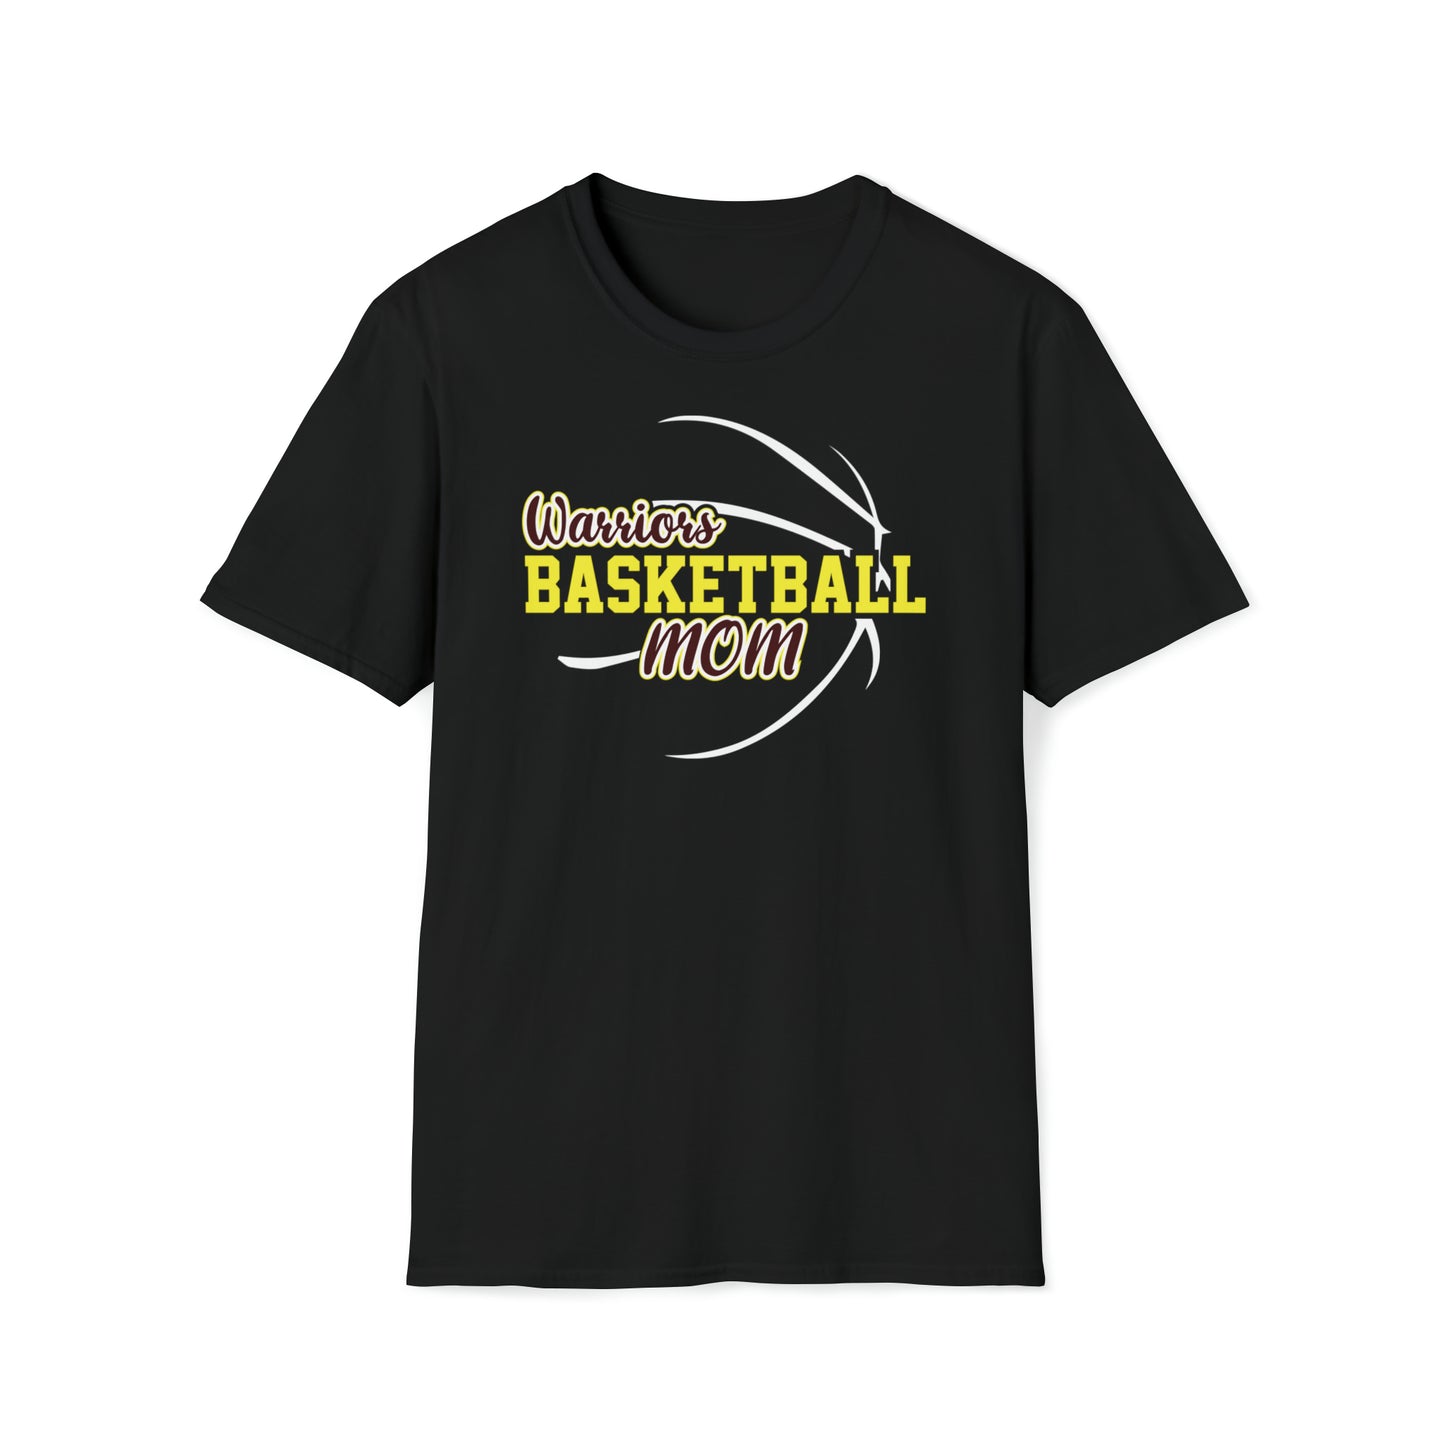 Warriors Basketball Mom Unisex Softstyle T-Shirt